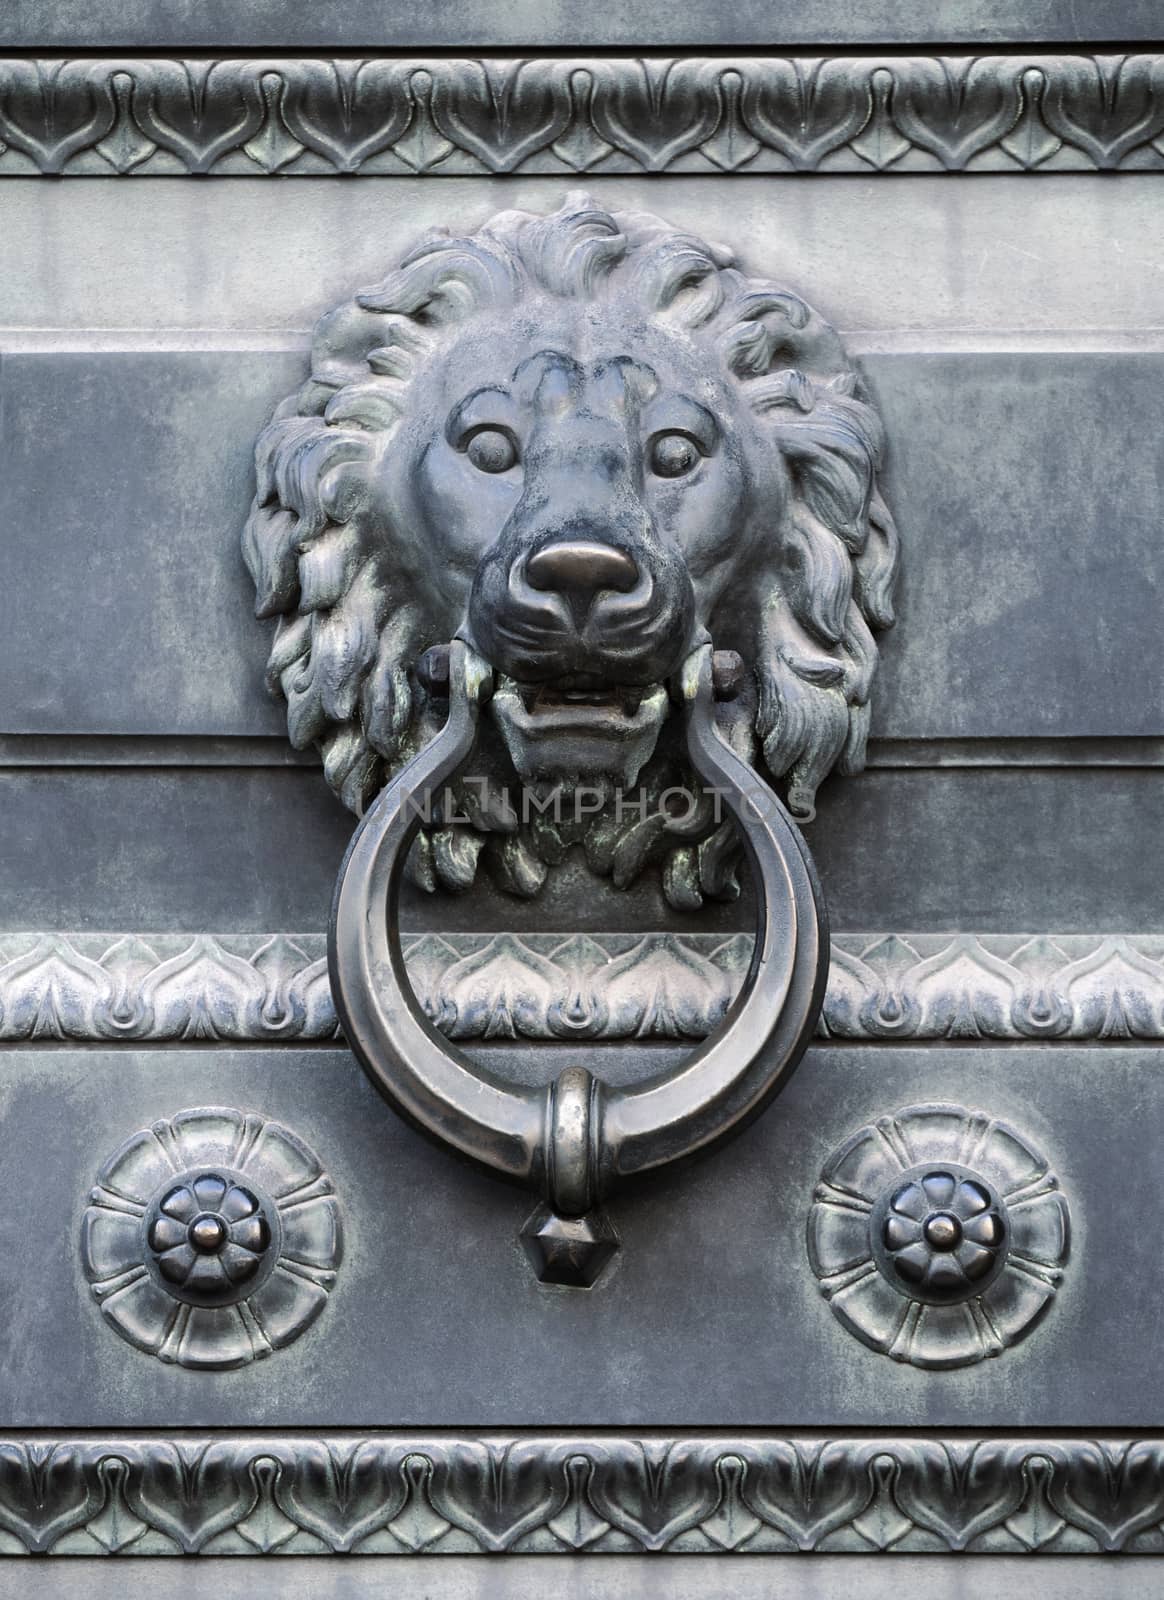 Old lion head door knocker monochrome toned